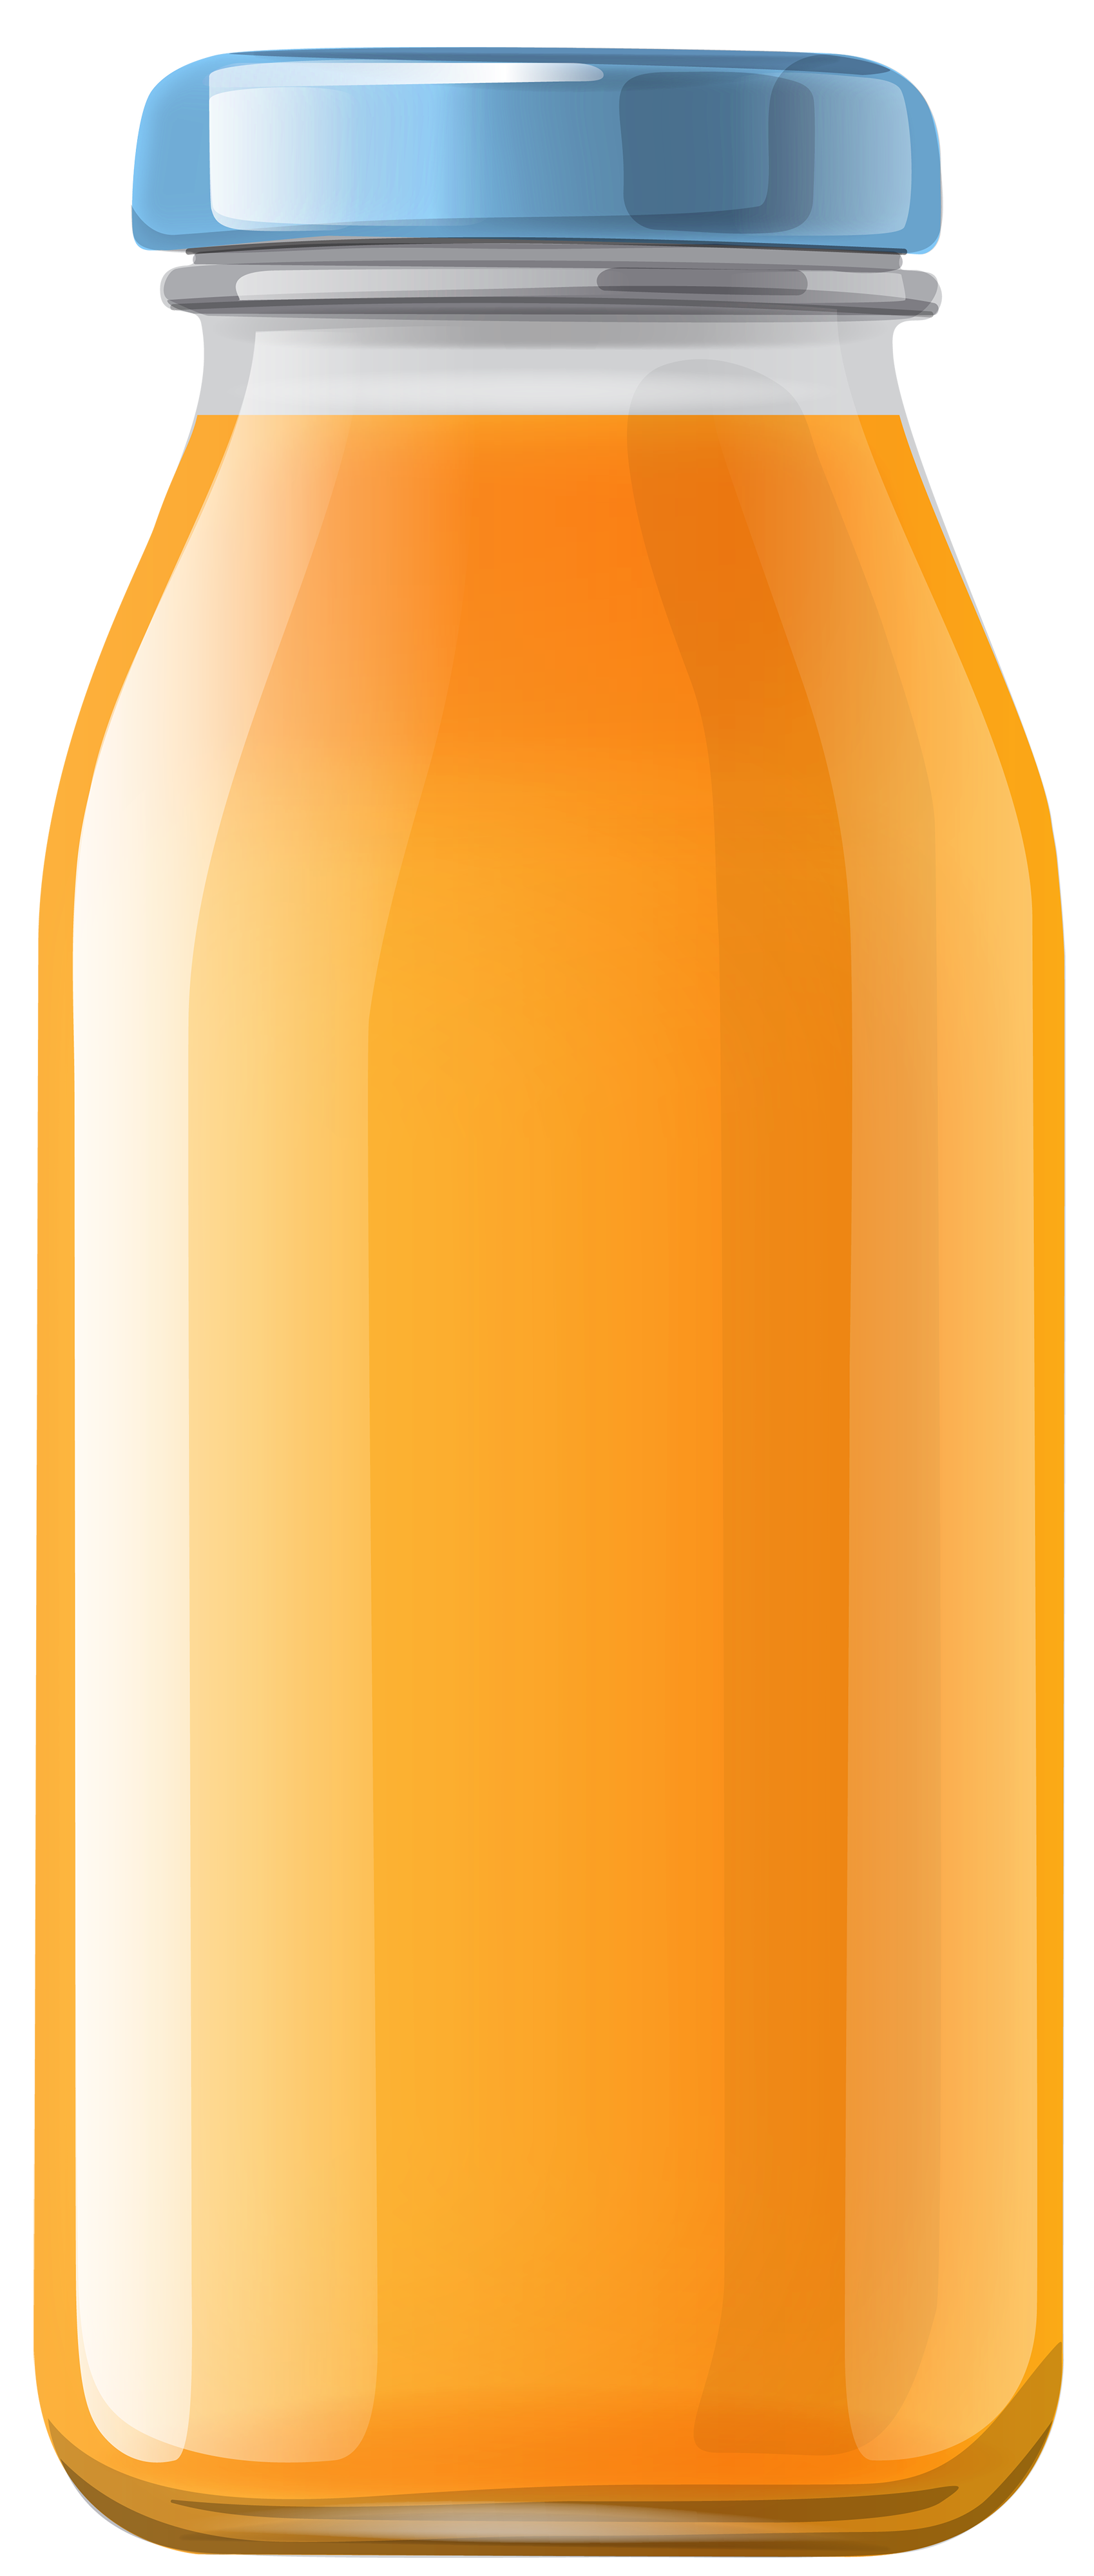 Orange juice bottle png. Yogurt clipart liquid container